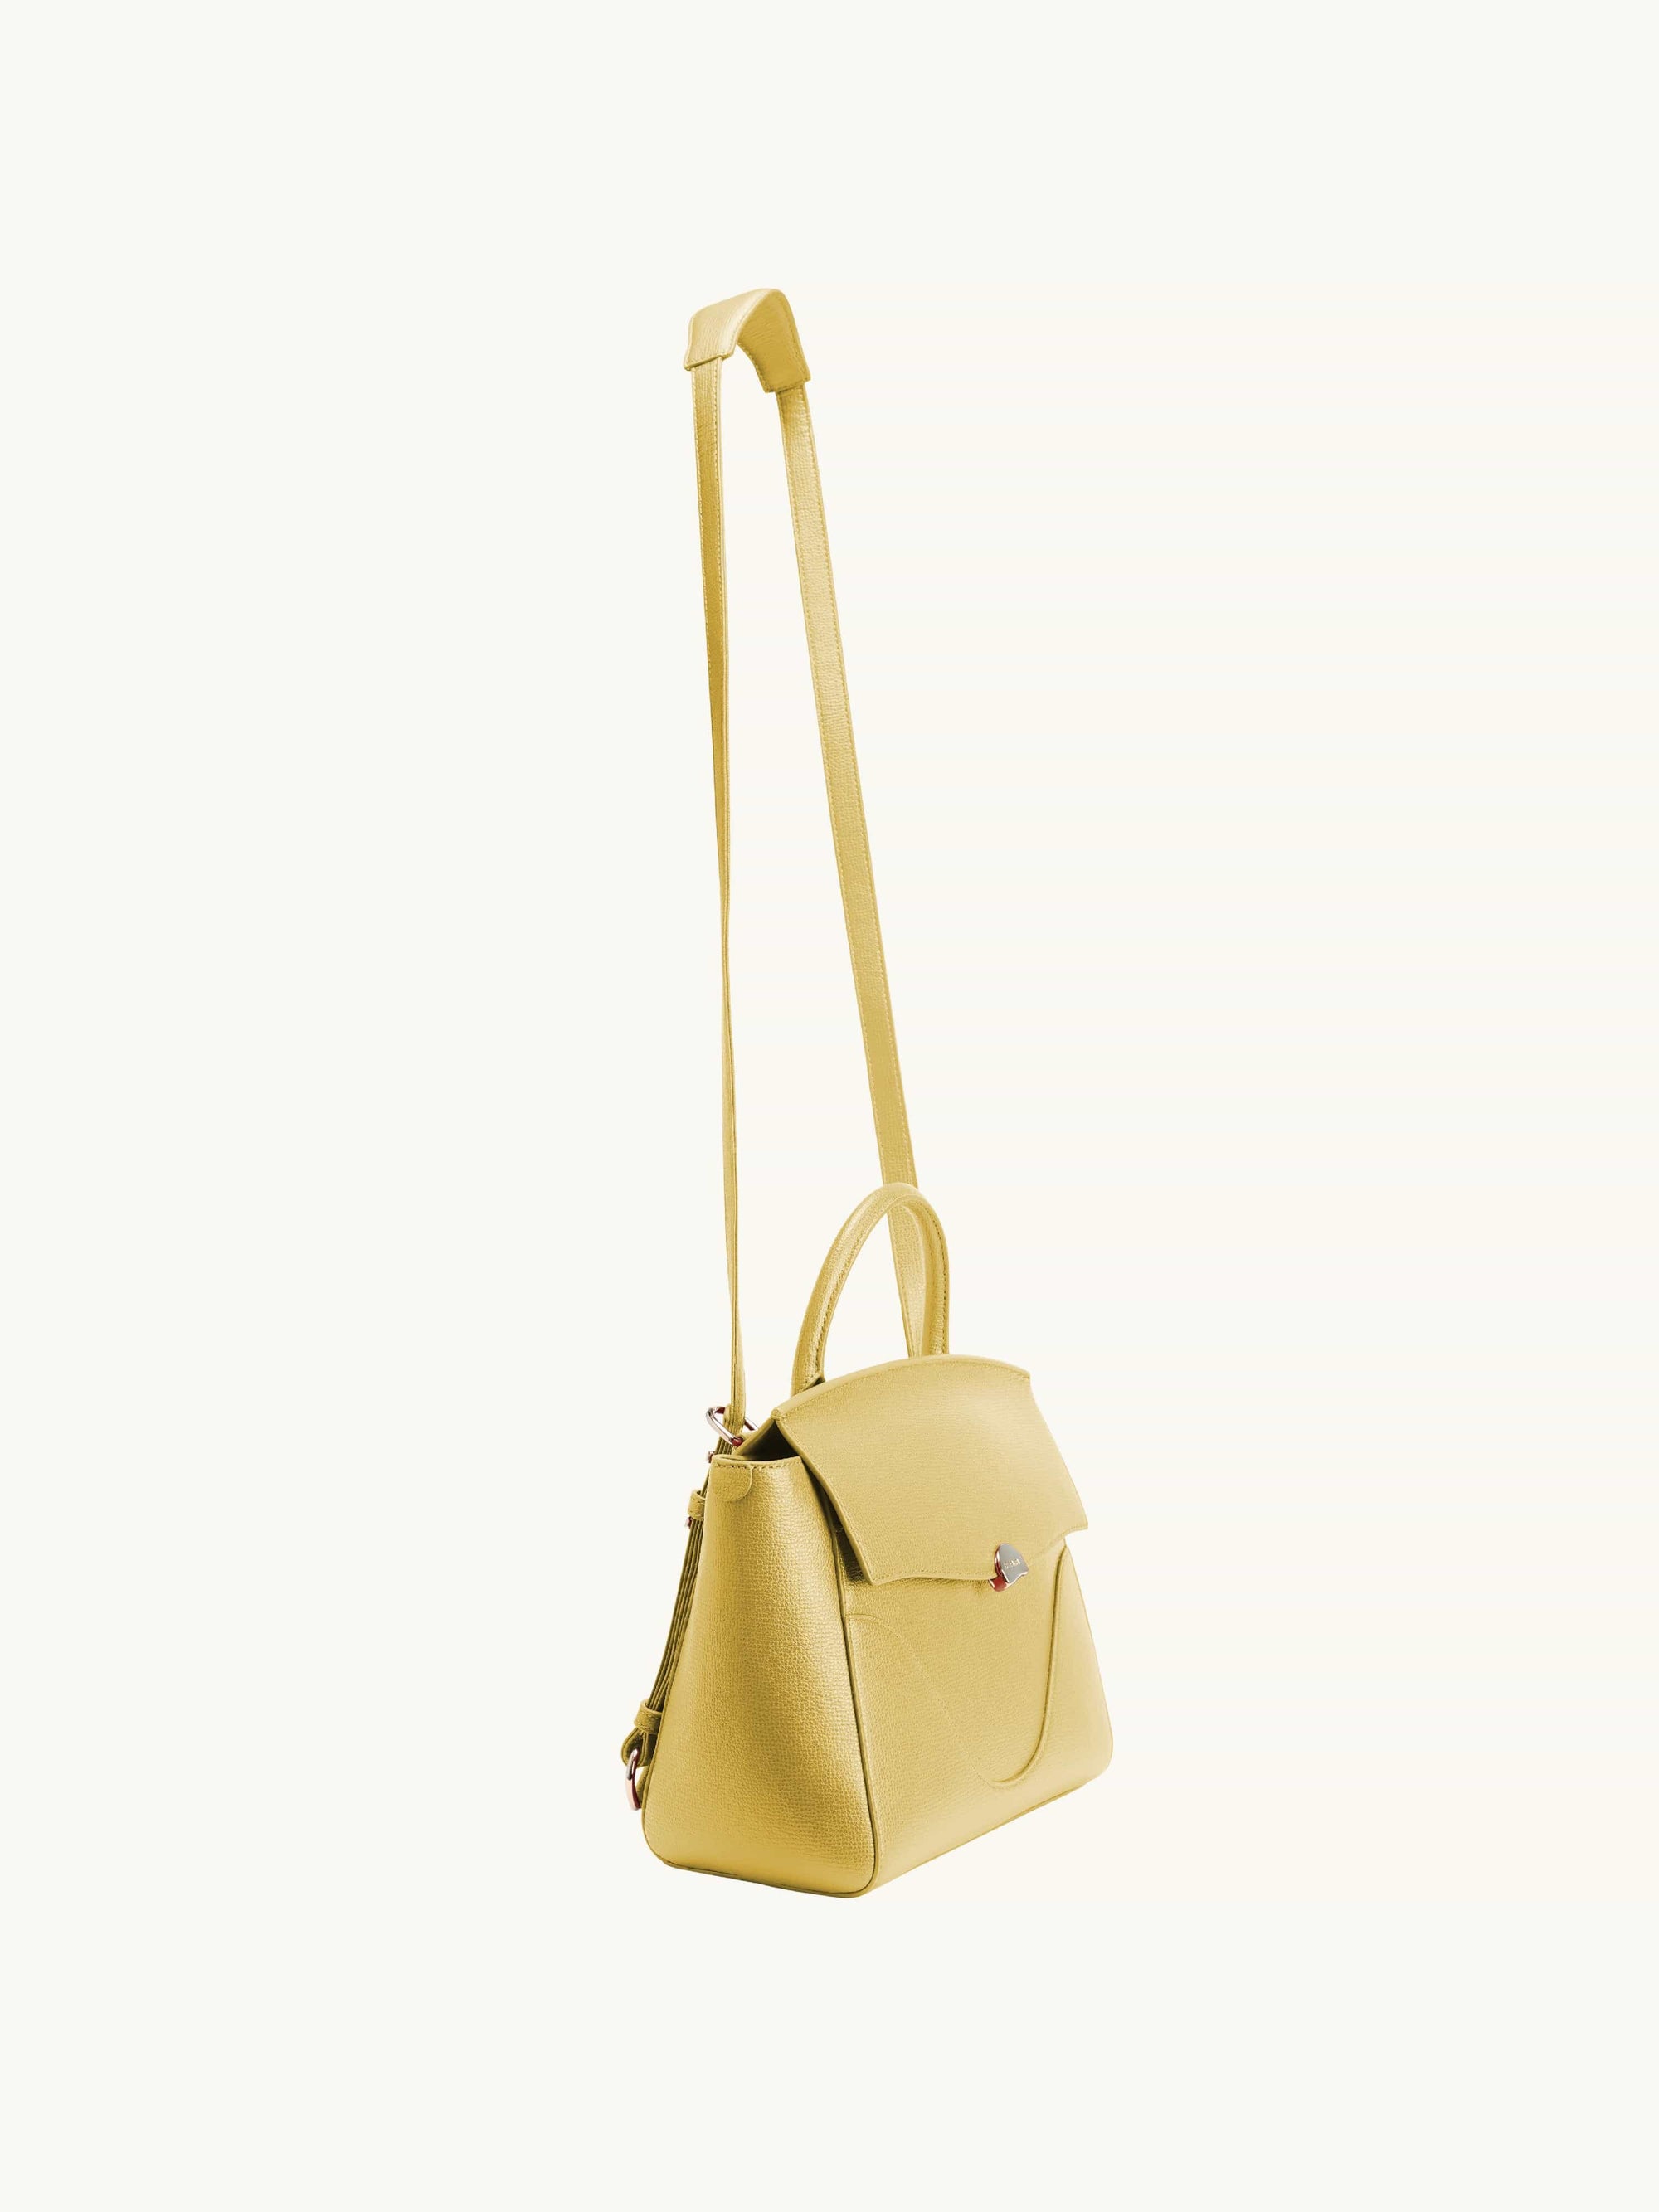 Backpack - Convertible Handbag for Women - Yellow - Leather - Regular Capacity | Oleada